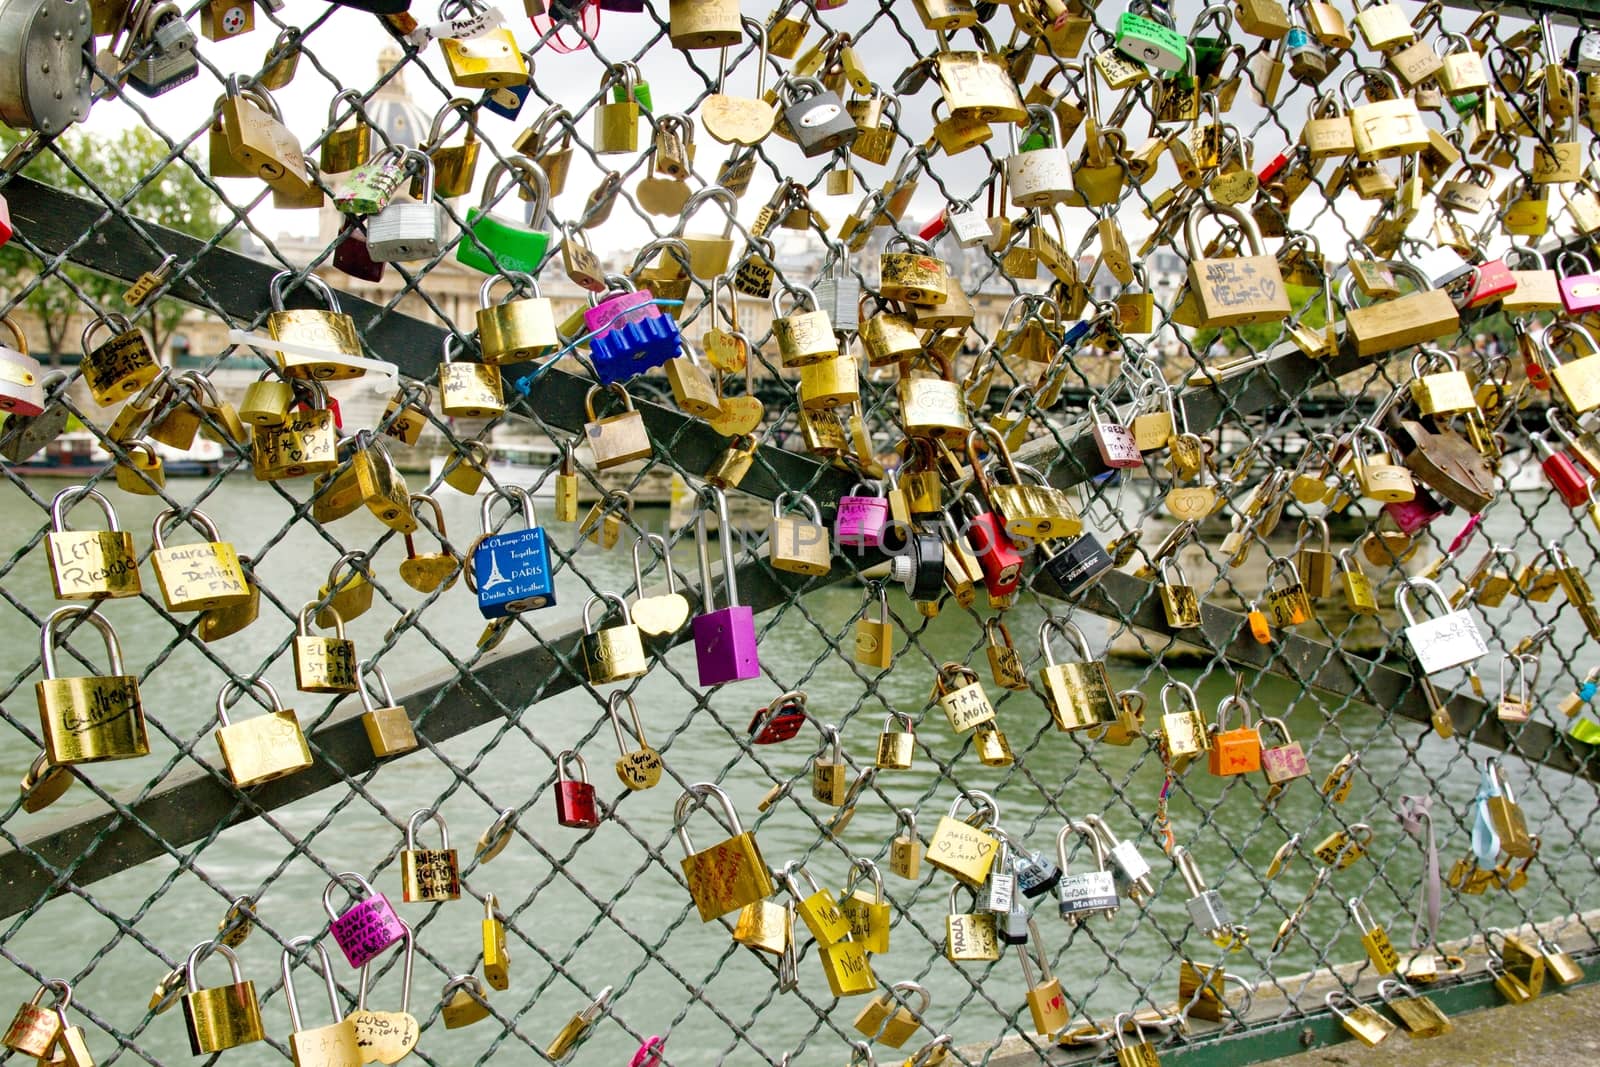 Parisian love locks by Dermot68